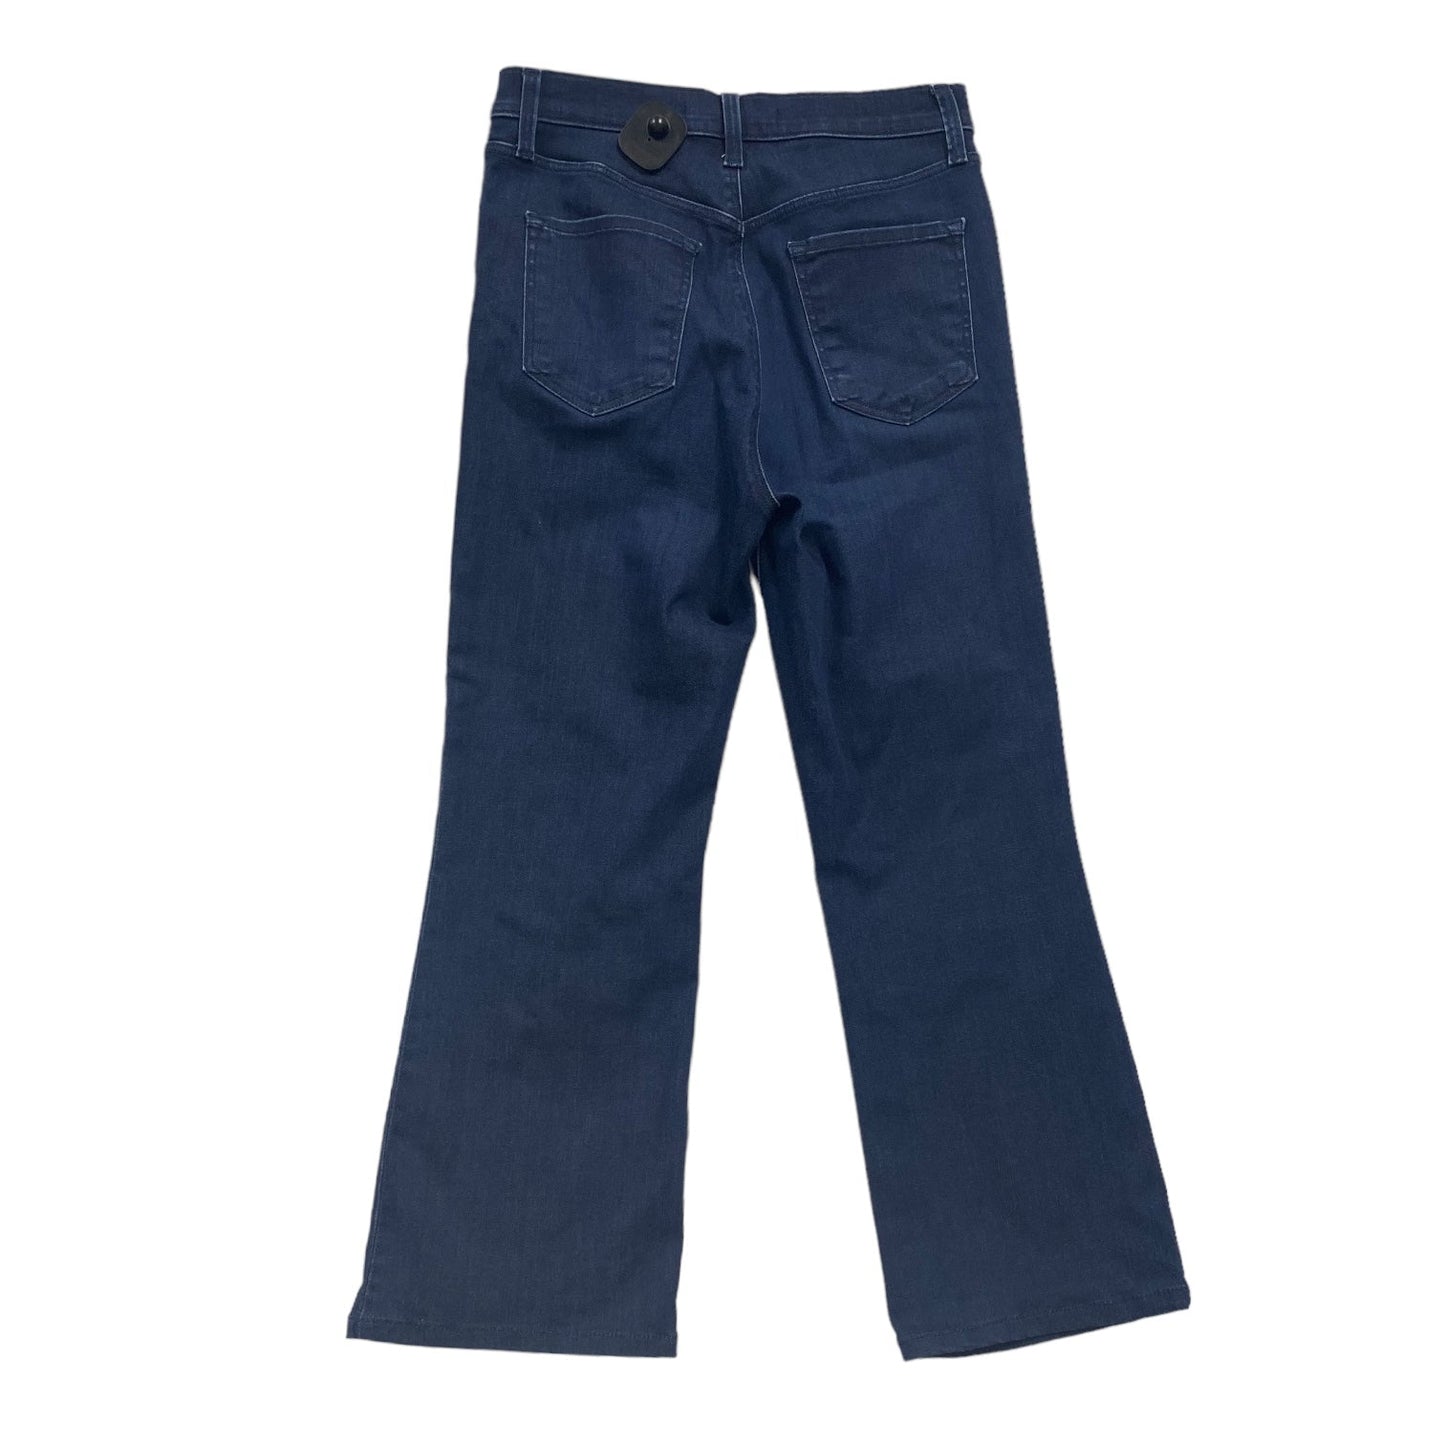 Blue Denim Jeans Boot Cut J Brand, Size 4